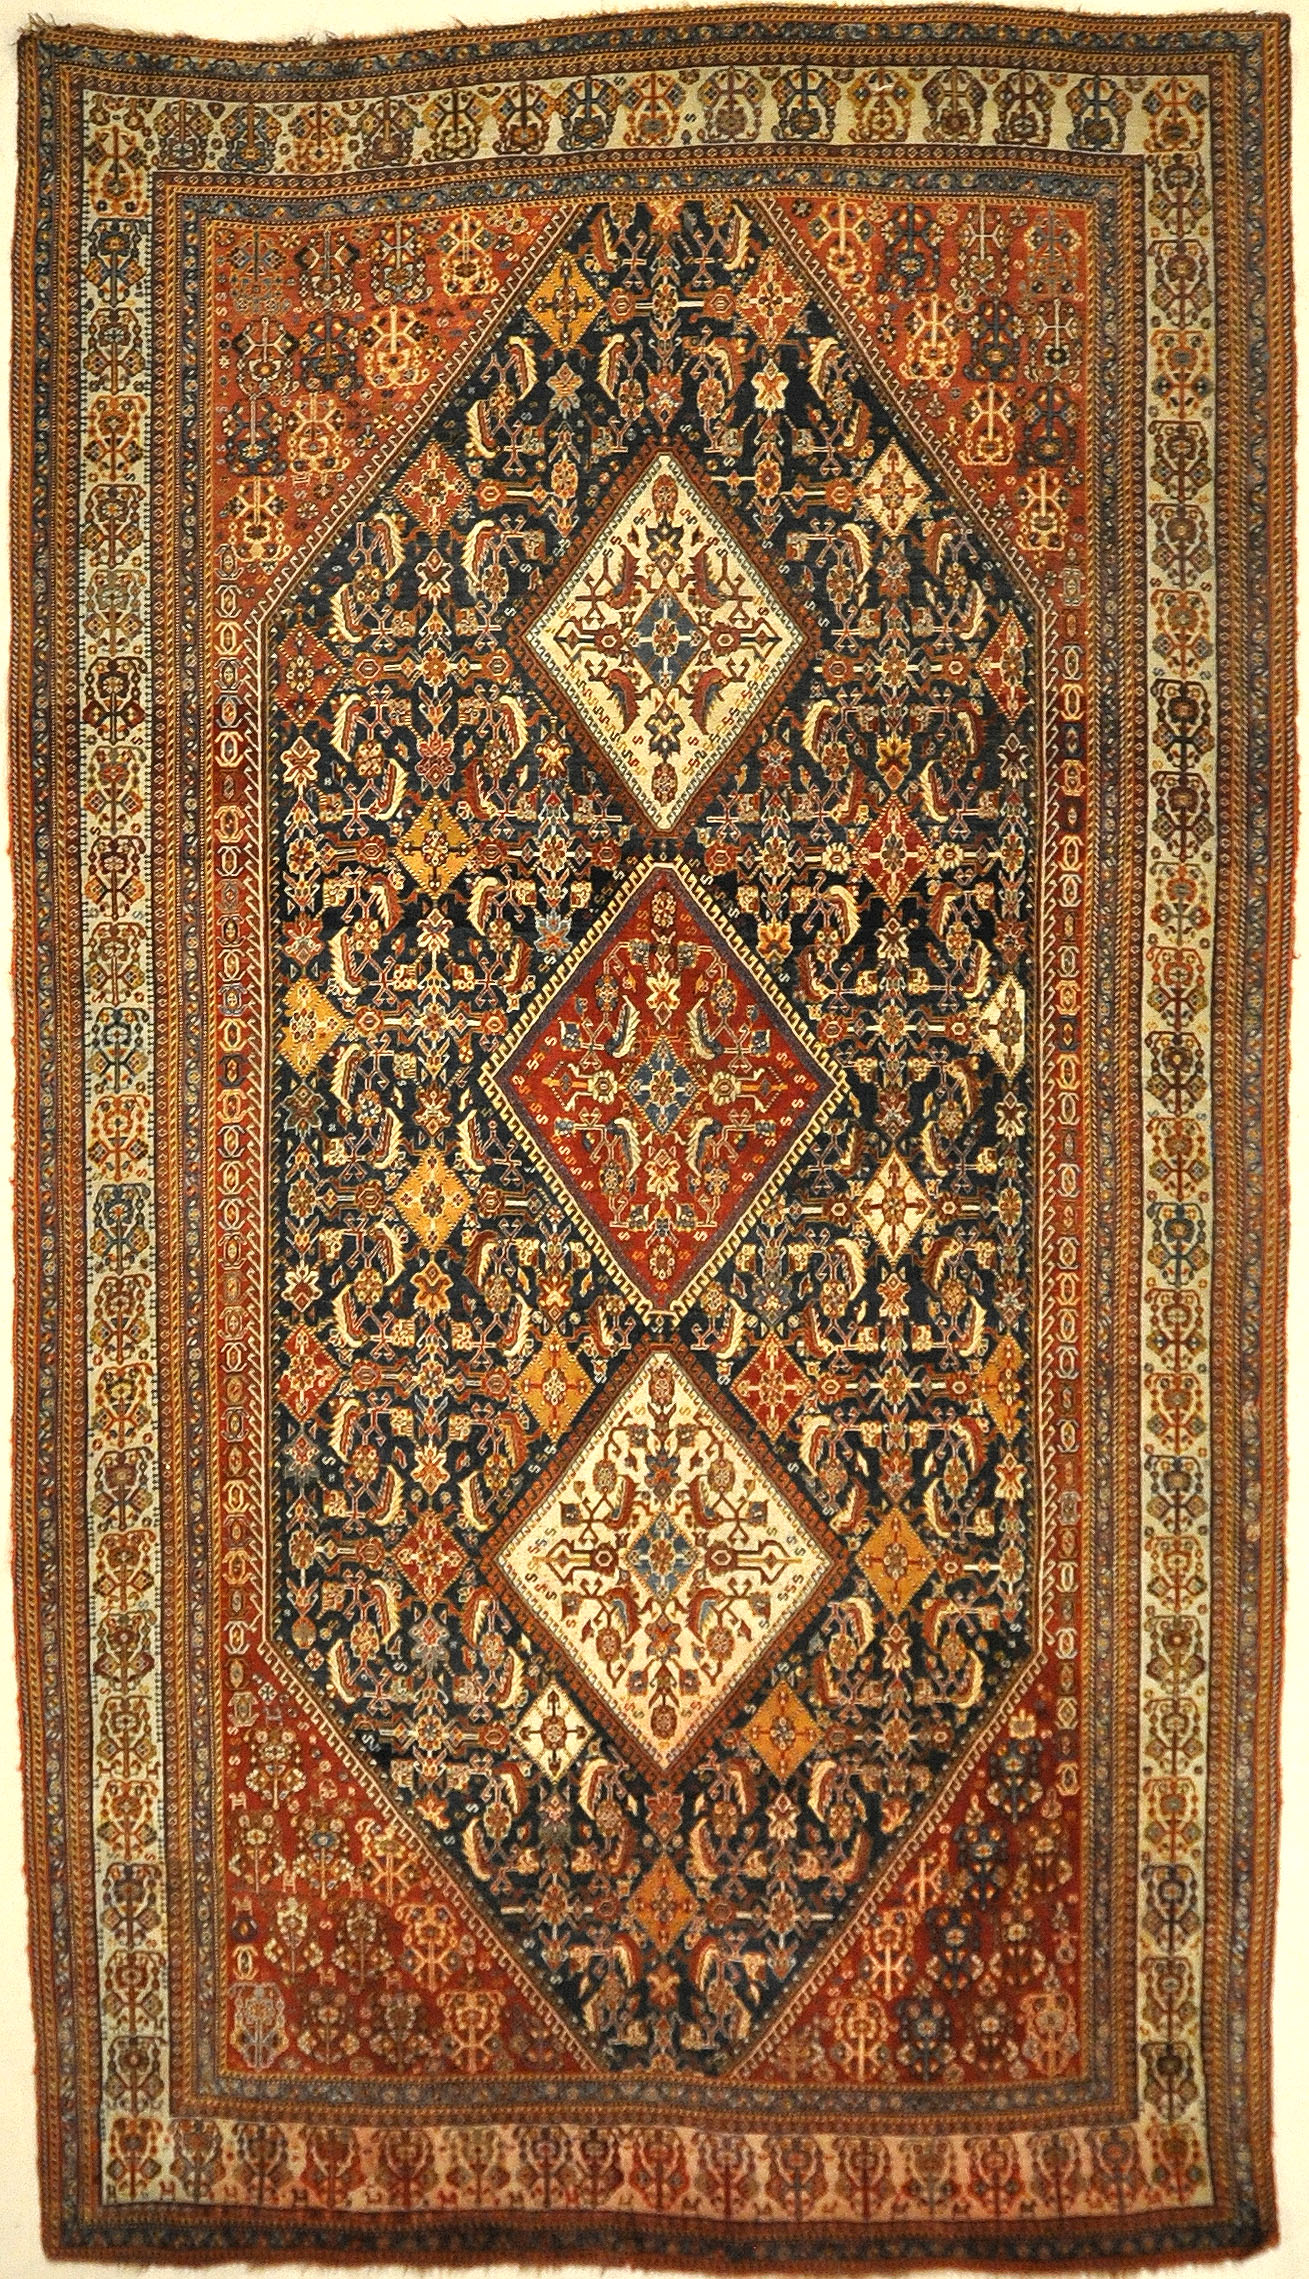 Fine Antique Qashqai Kashkuli Rug. A piece of genuine authentic antique woven carpet art sold by Santa Barbara Design Center, Rugs and More.